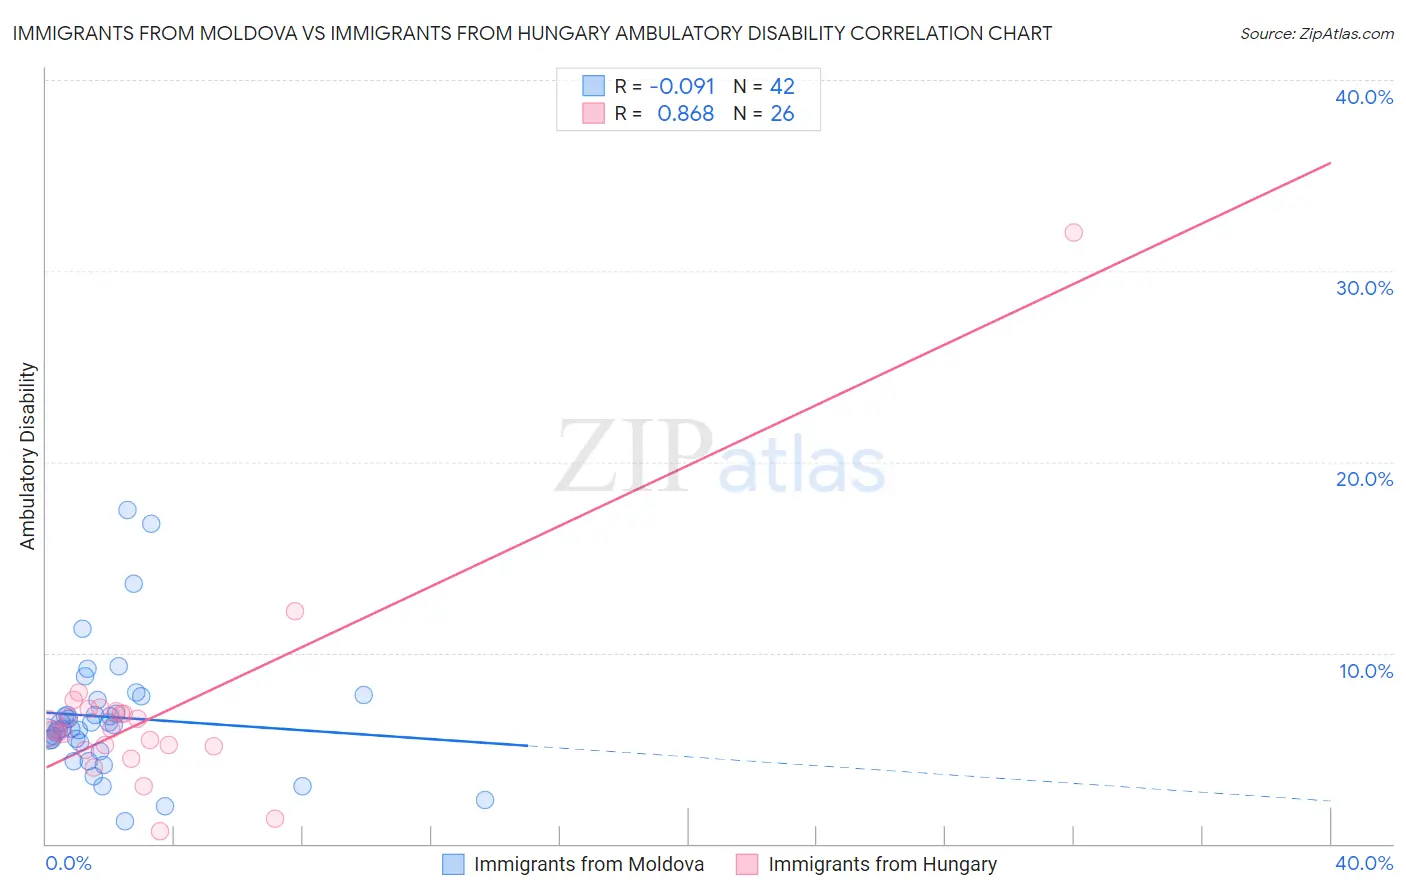 Immigrants from Moldova vs Immigrants from Hungary Ambulatory Disability